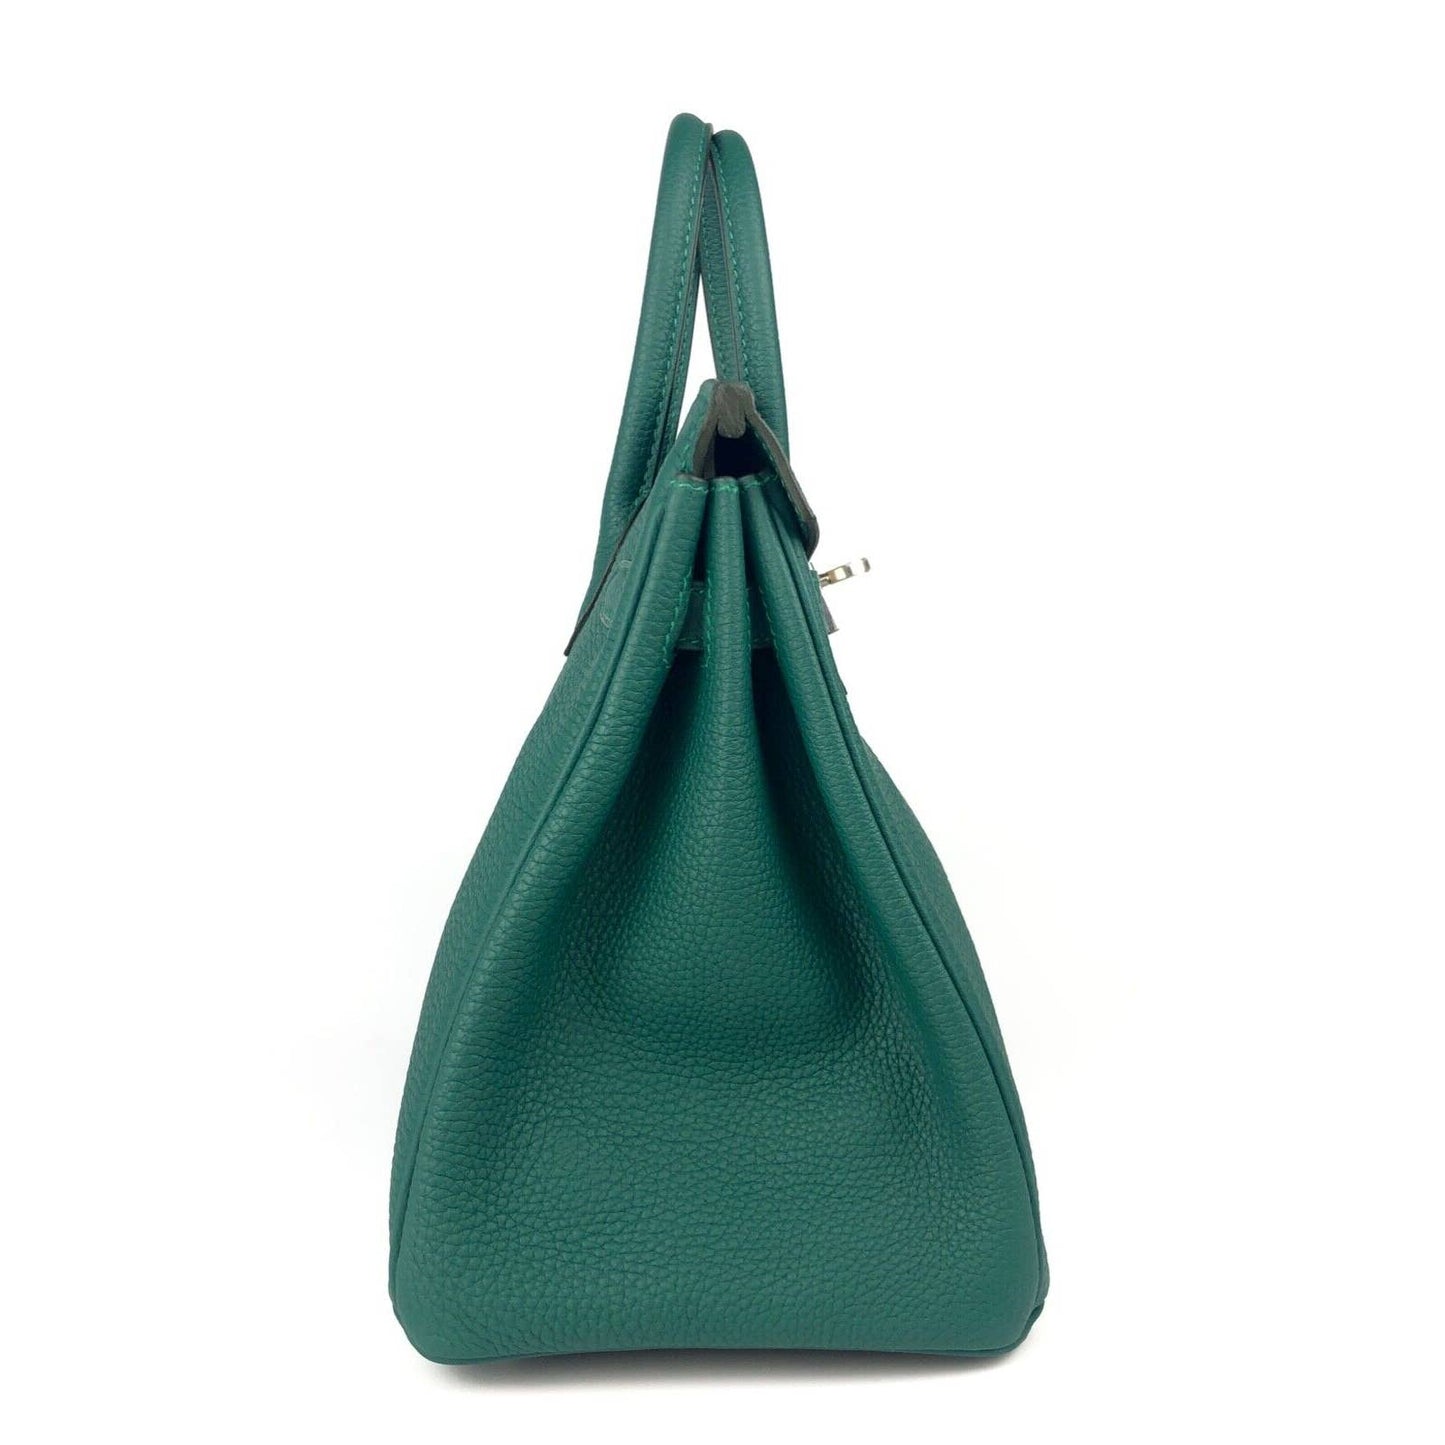 Hermes Birkin 25 Malachite Green Togo Leather Palladium Hardware Handbag